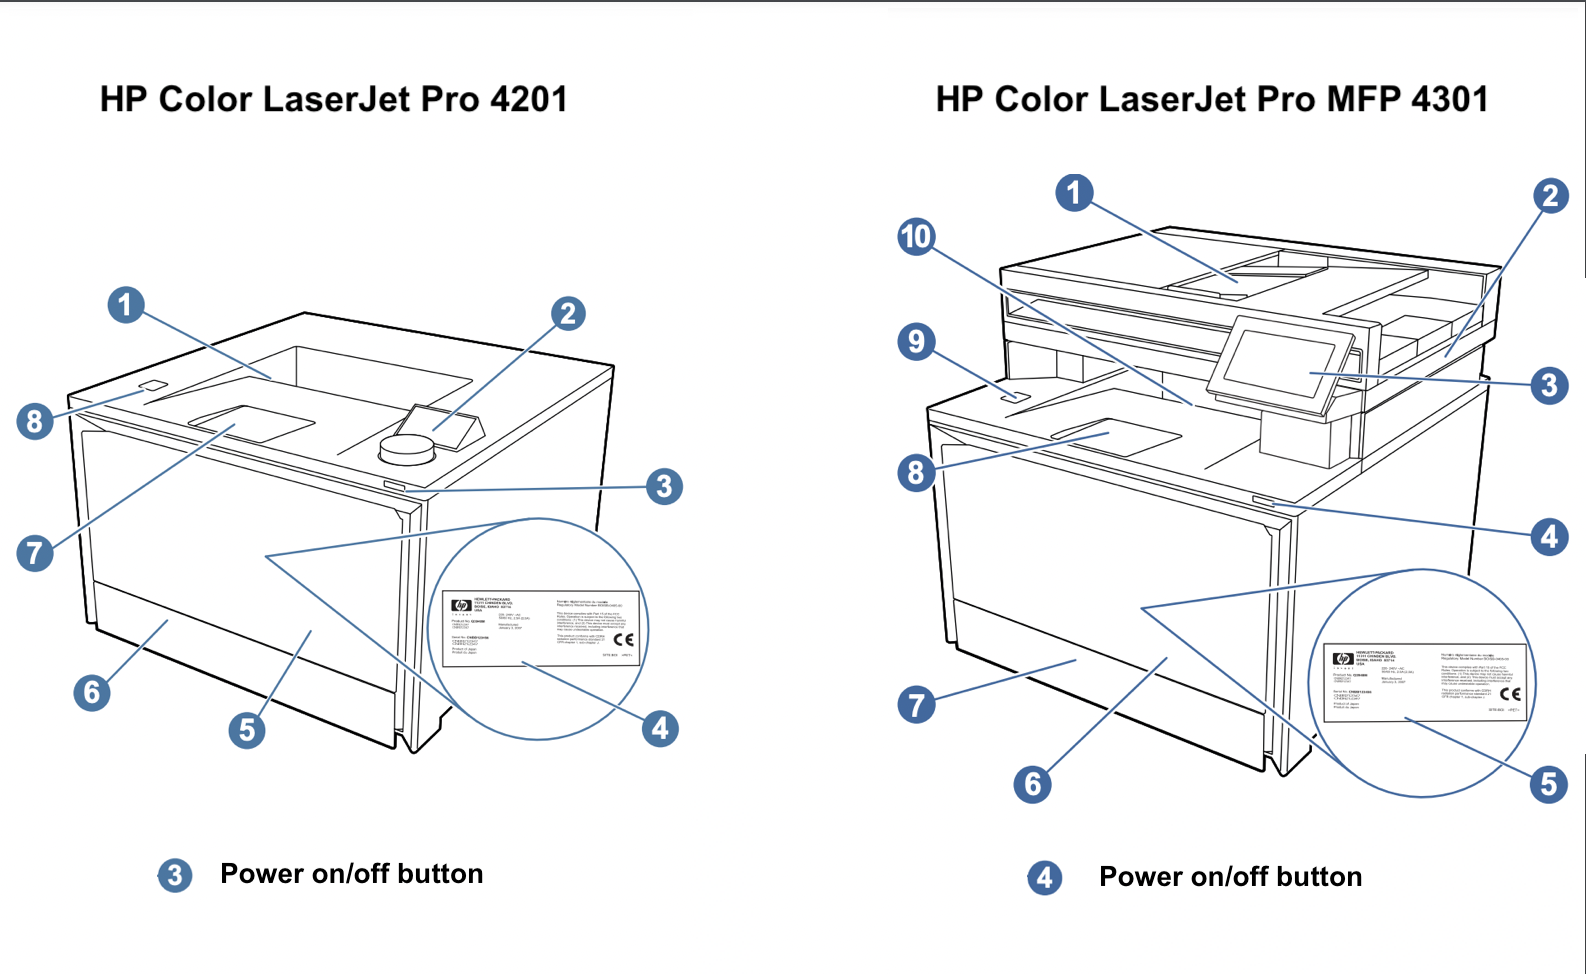 Fix HP Event Code F0.01.09.01 by Restarting Printer